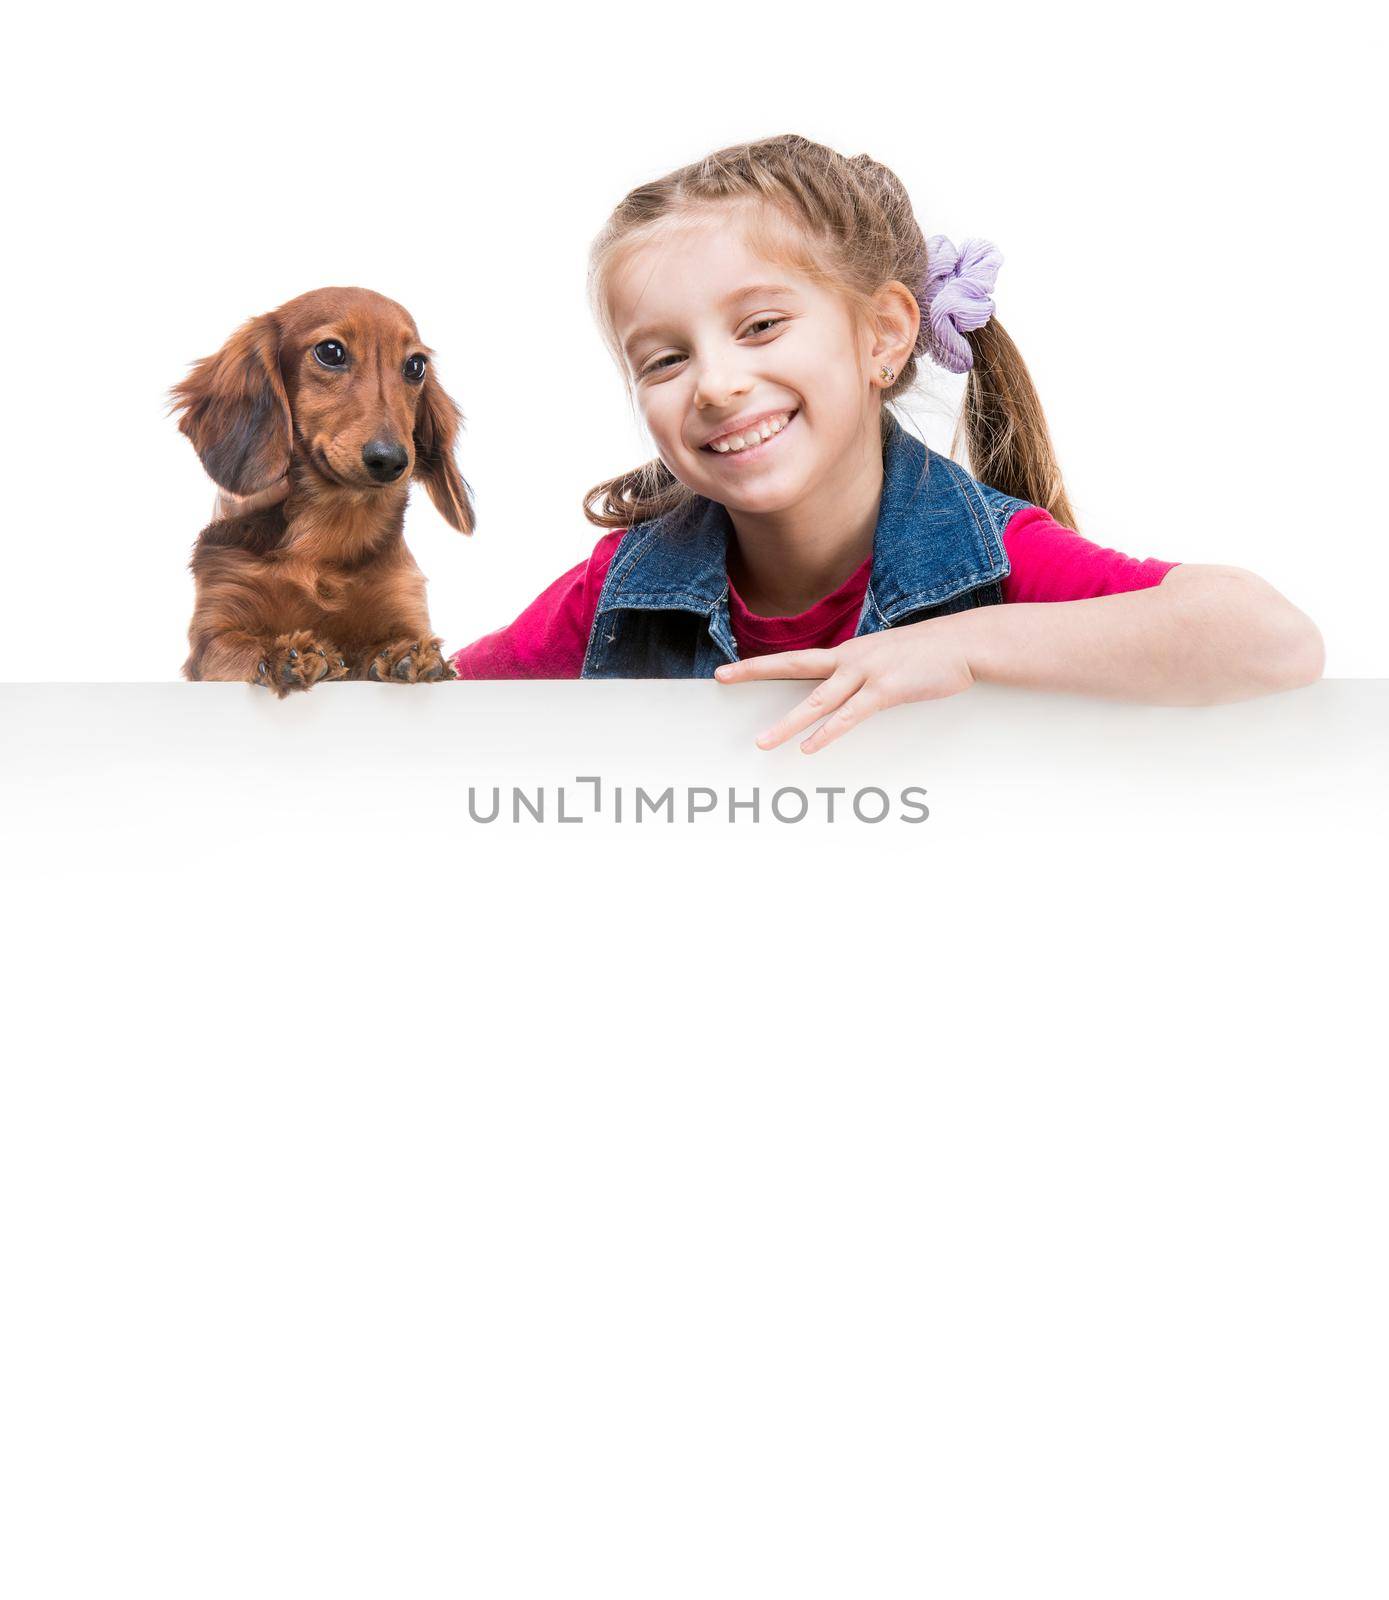 little girl with dachshund by GekaSkr